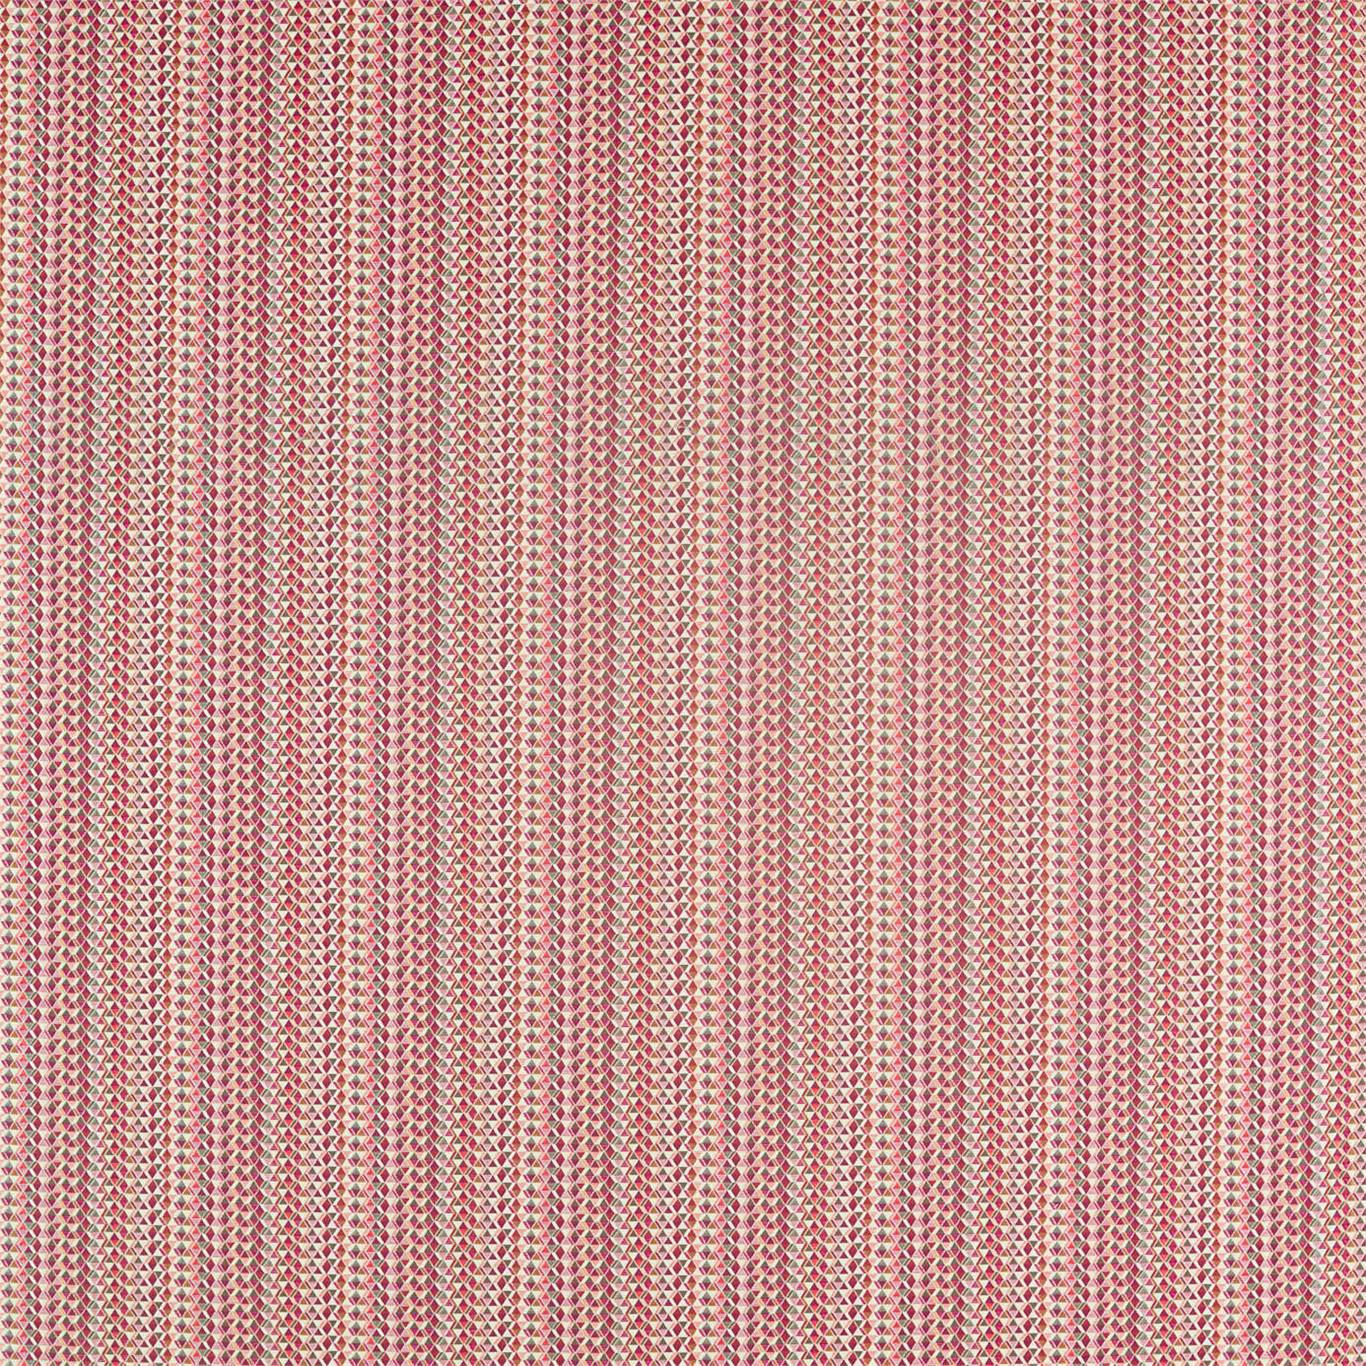 Concentric Fabric by Scion - NZAC132918 - Flamenco